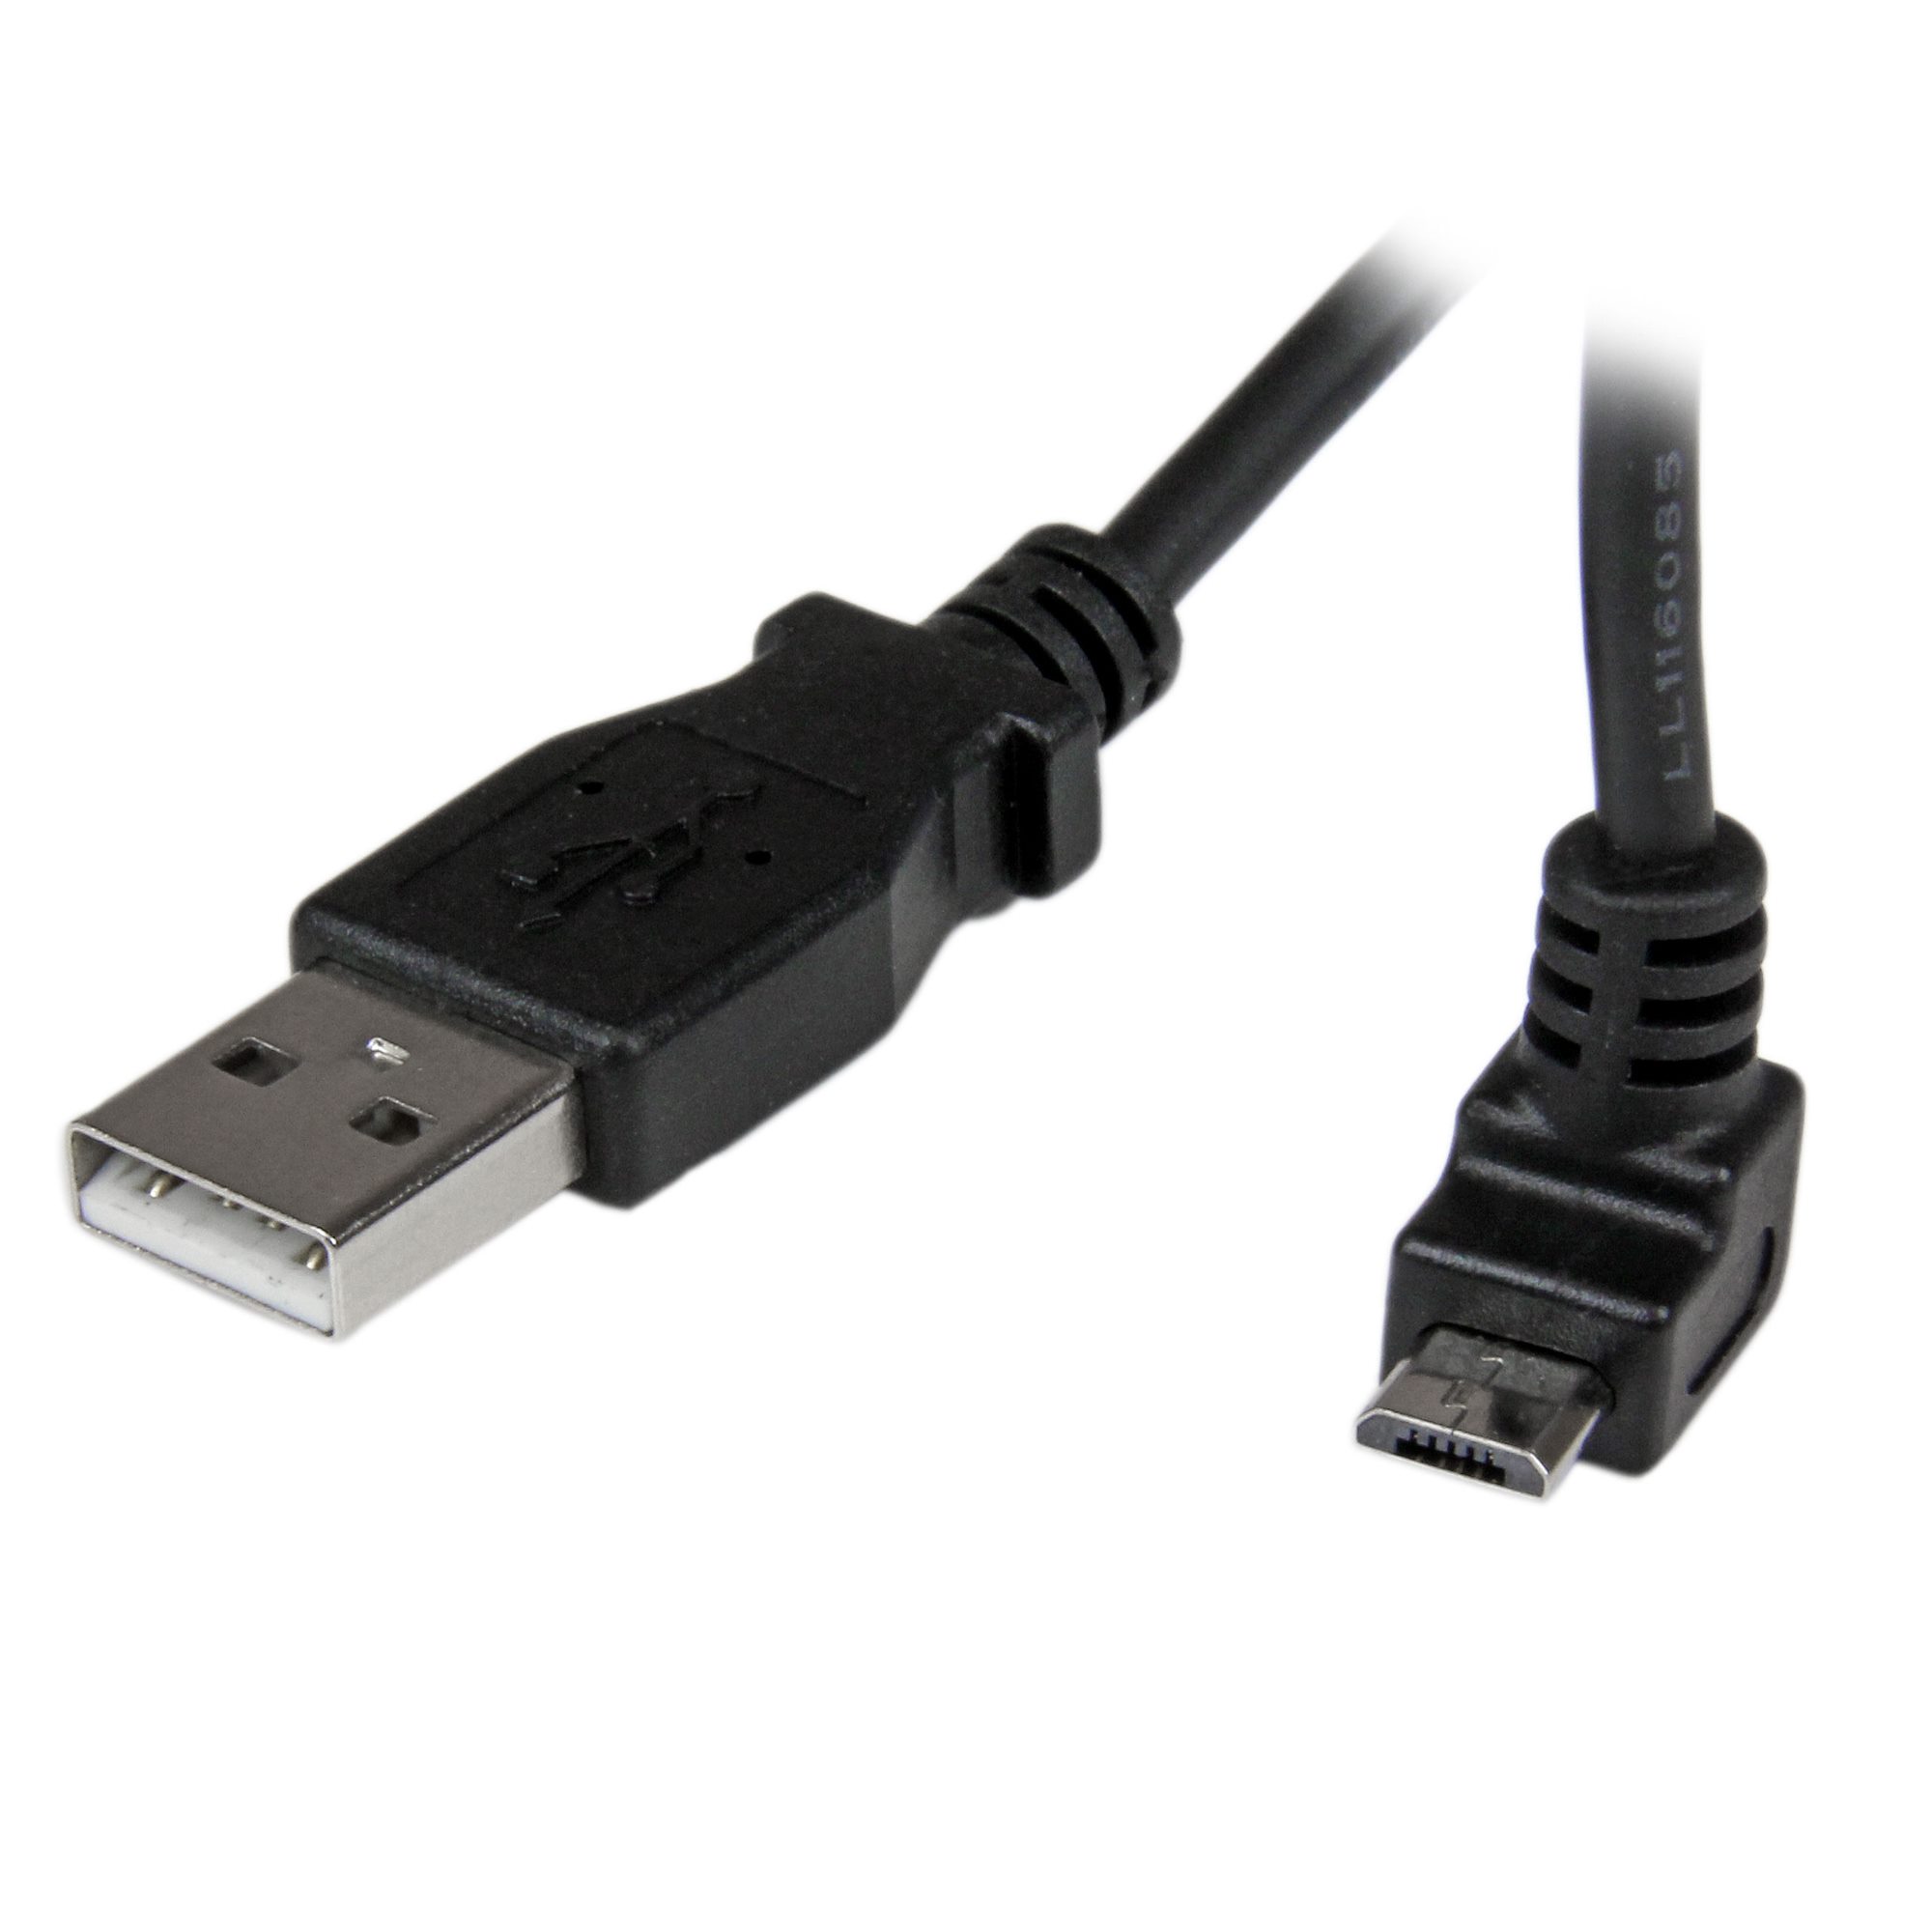 USBケーブル - 変換コネクタ・ケーブル